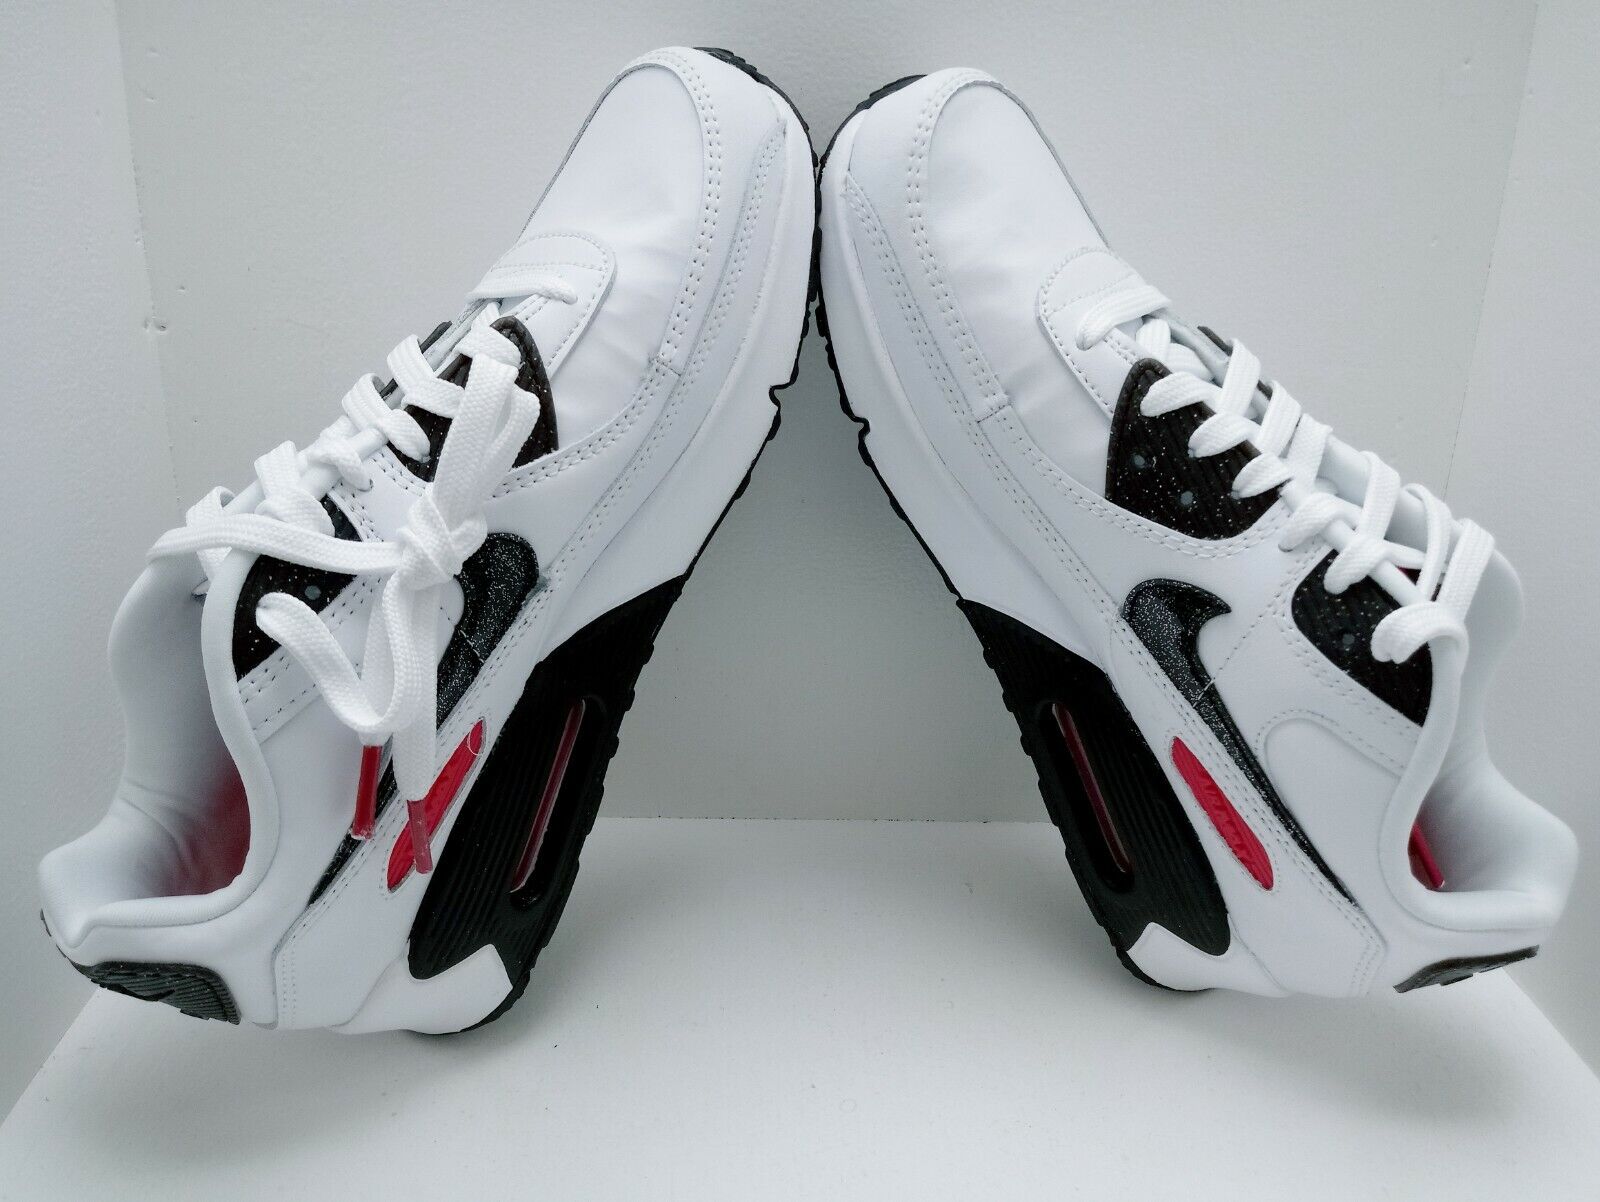 Nike Air Max 90 LTR SE Big Kids’ Shoes